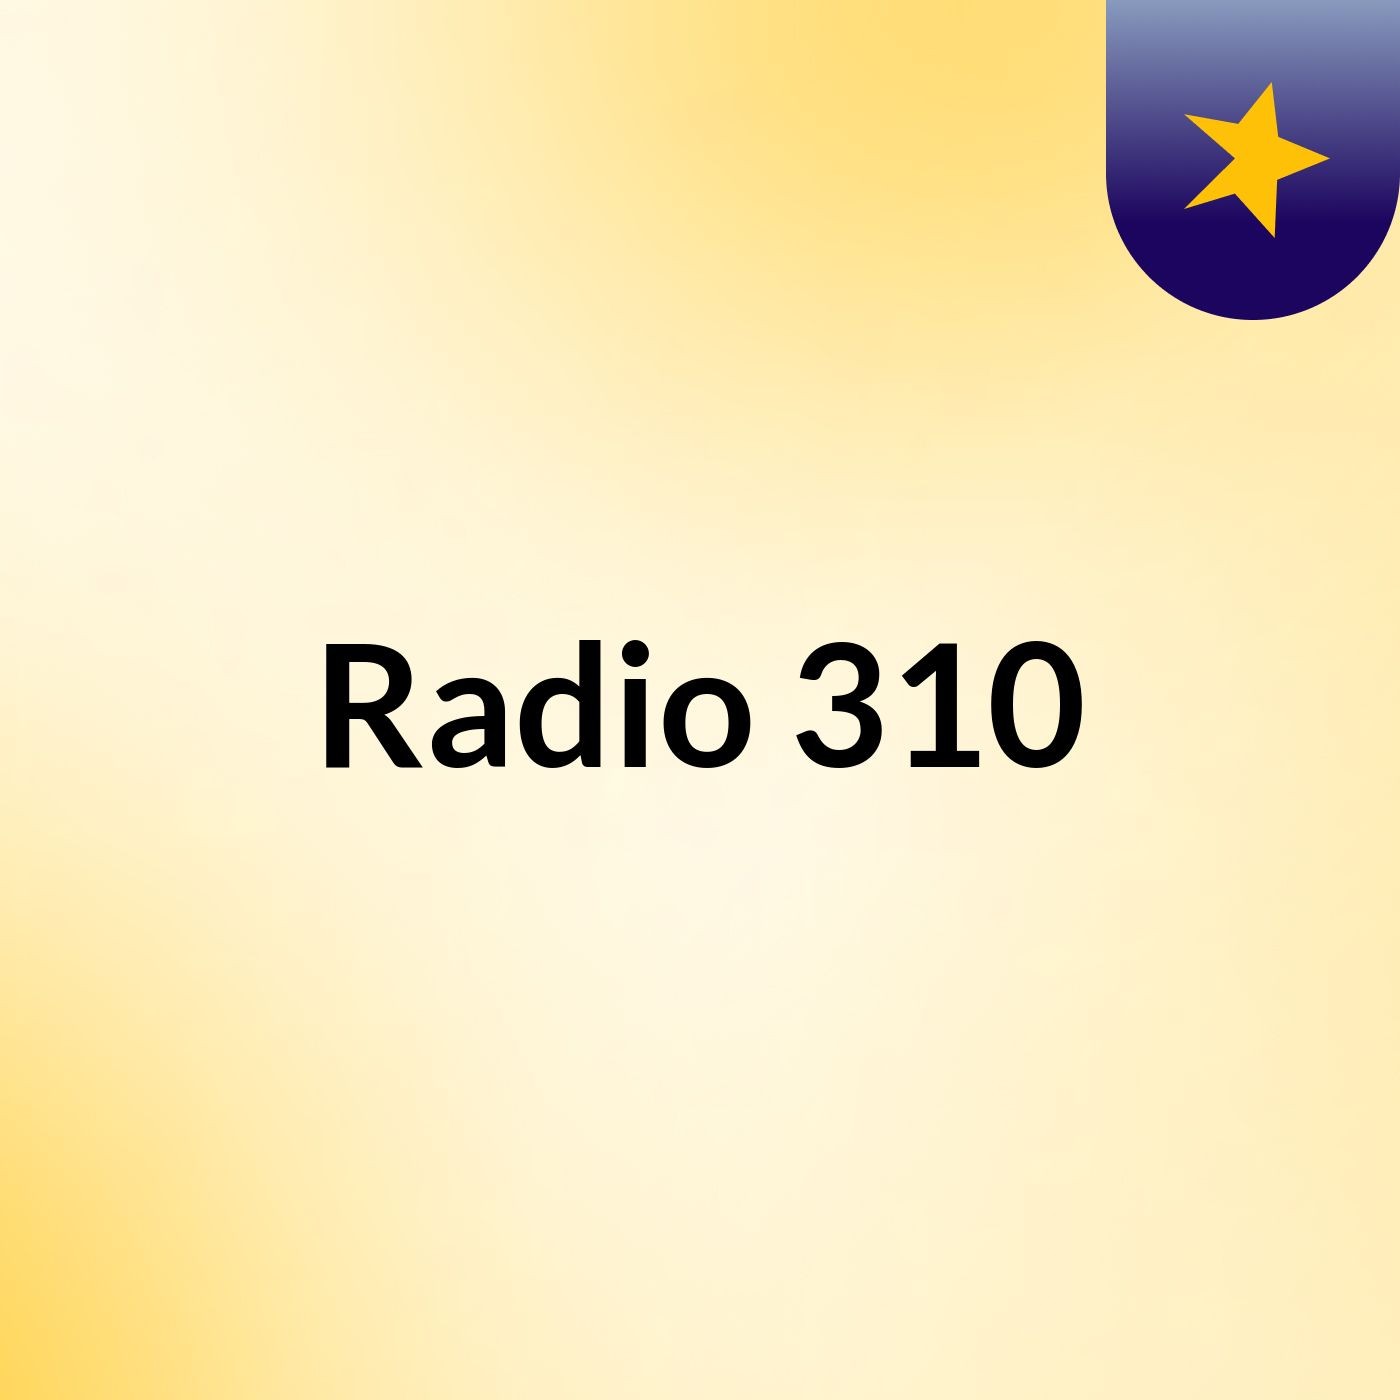 Episode 3 - Radio 310